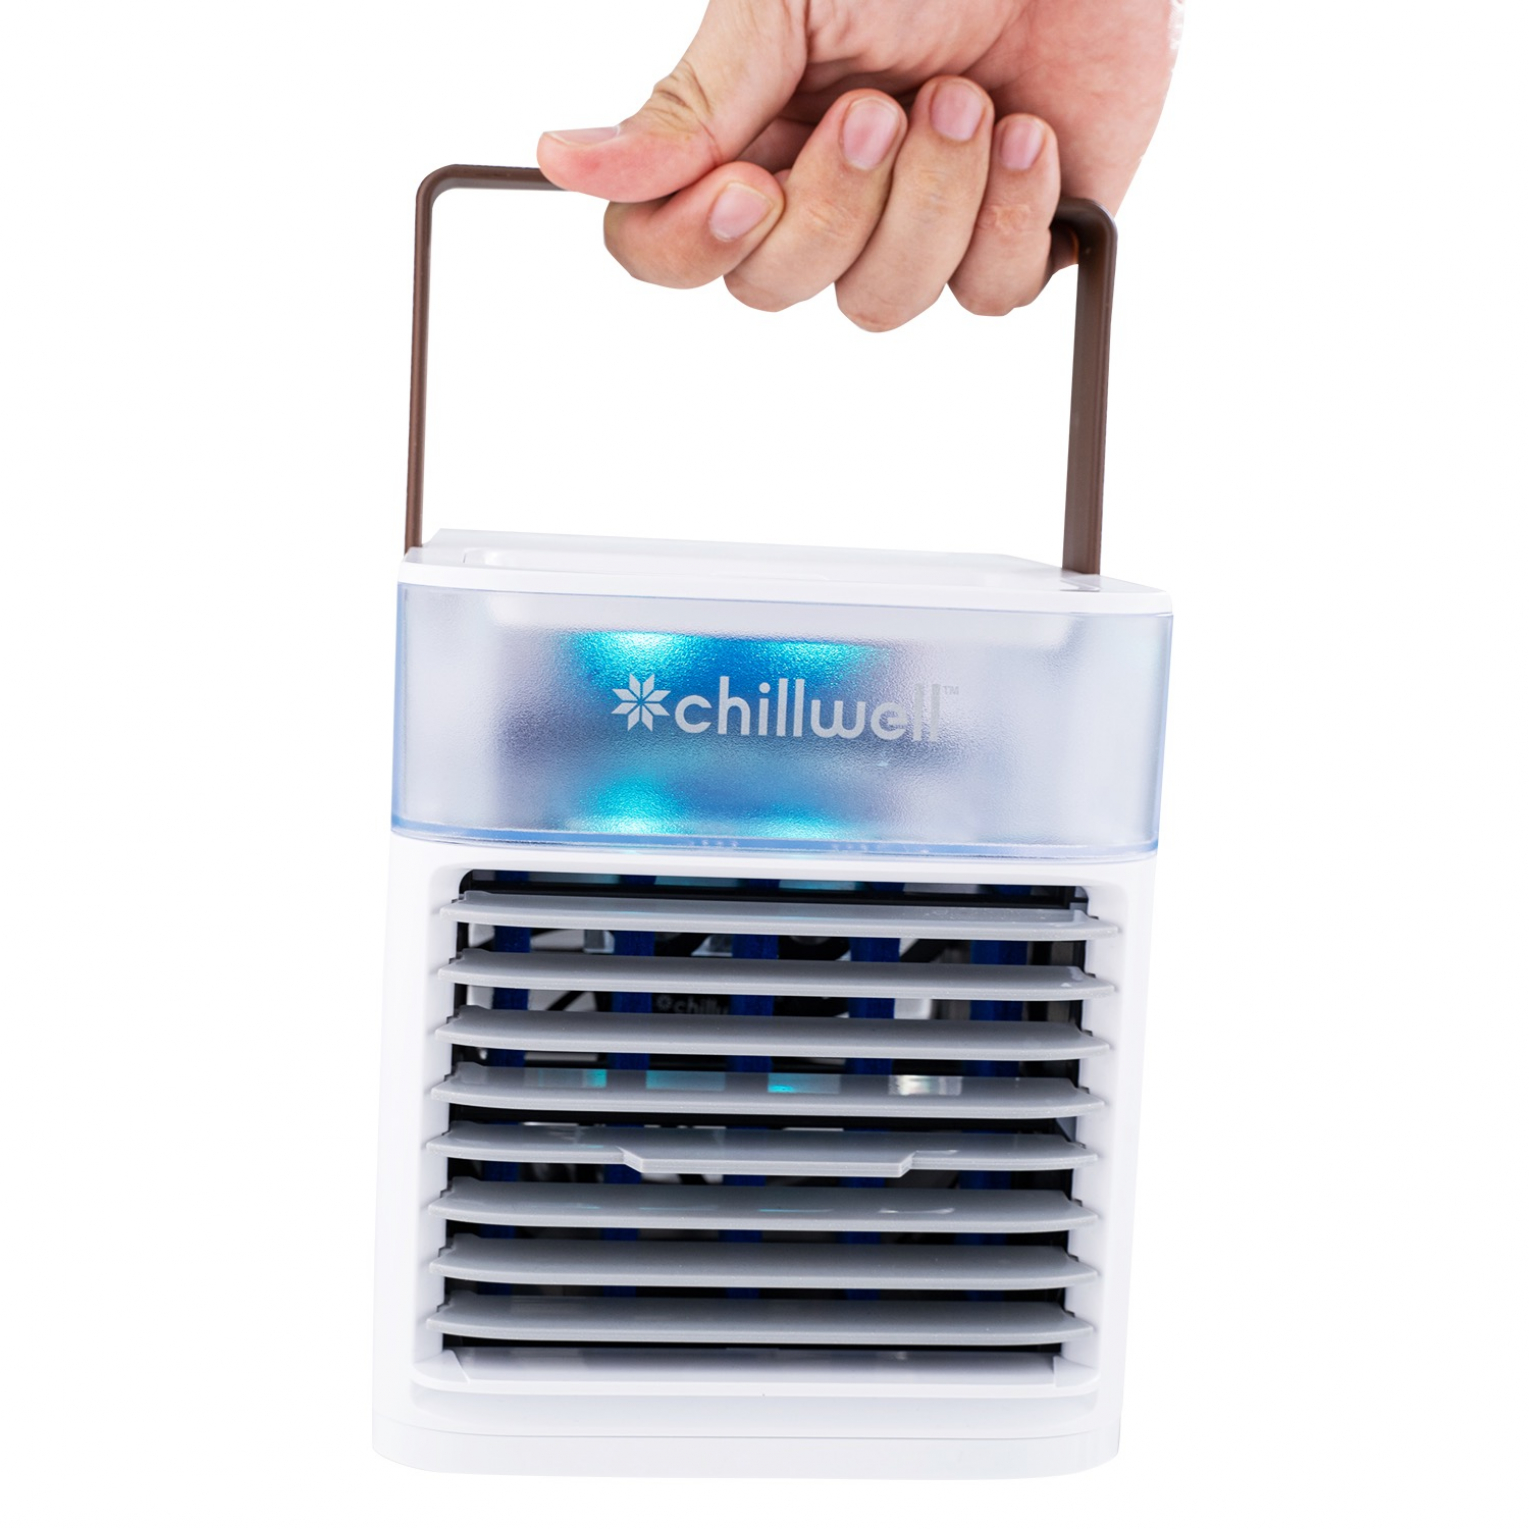 Chillwell AC Freezer Reviews